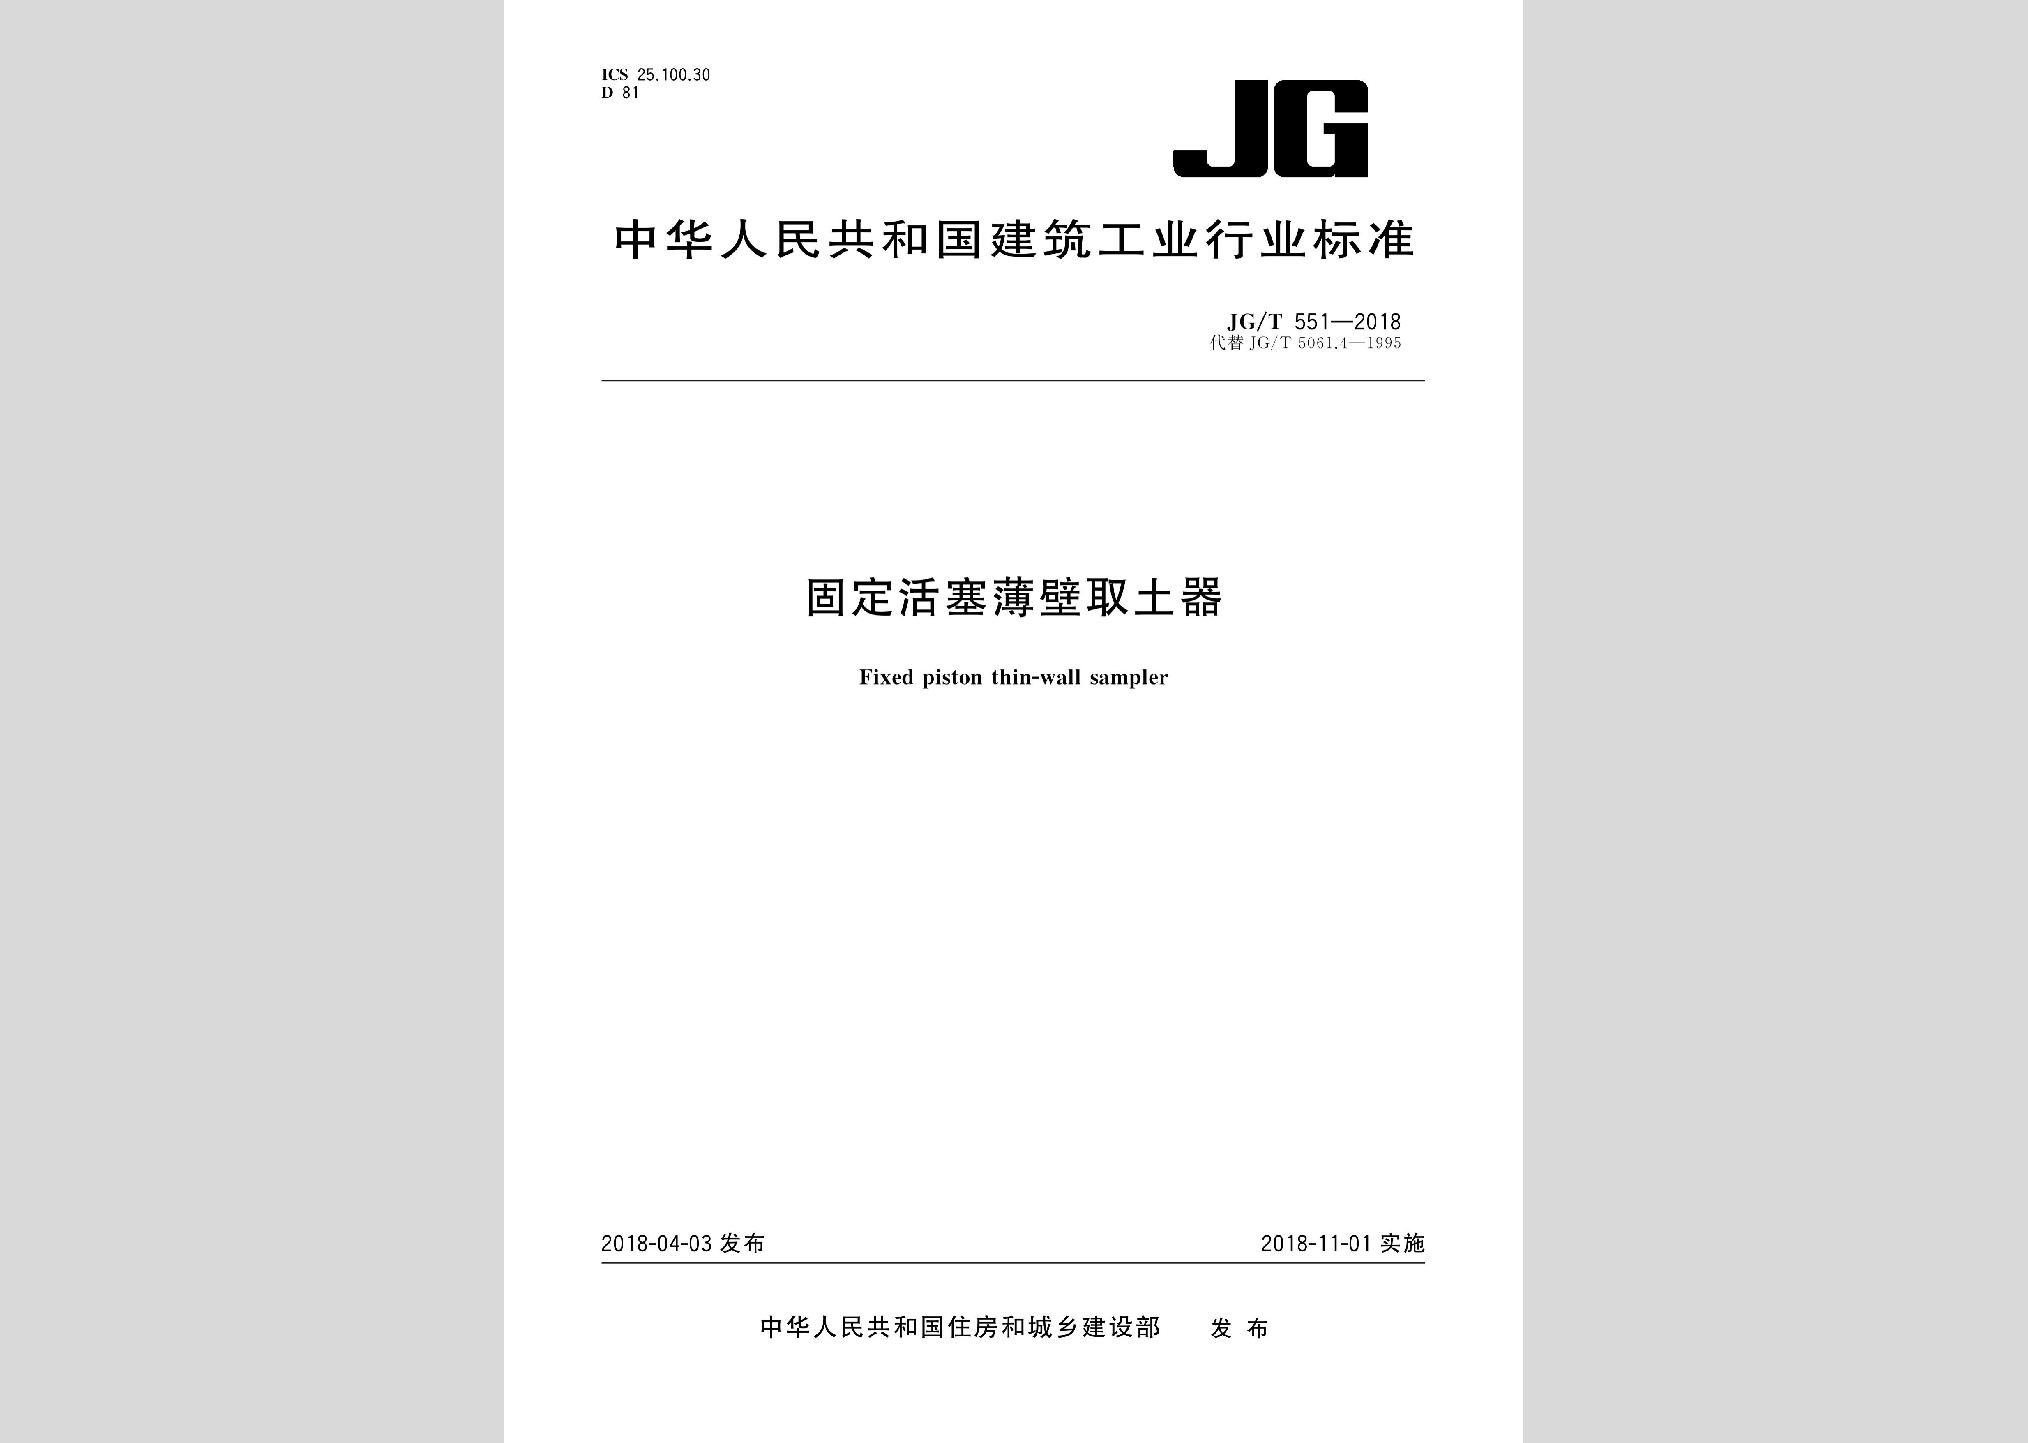 JG/T551-2018：固定活塞薄壁取土器